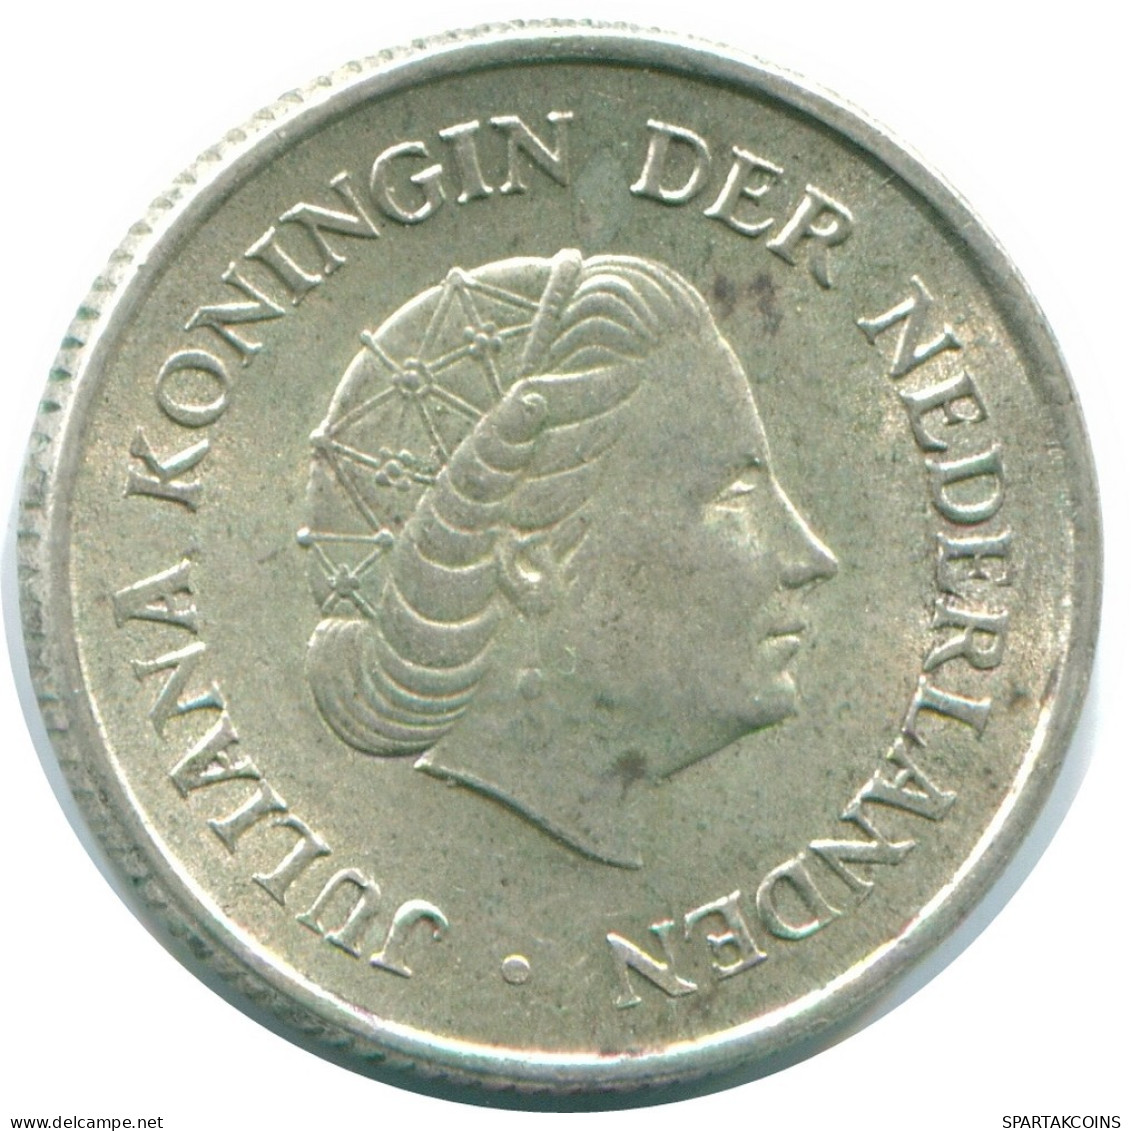 1/4 GULDEN 1967 NETHERLANDS ANTILLES SILVER Colonial Coin #NL11462.4.U.A - Netherlands Antilles